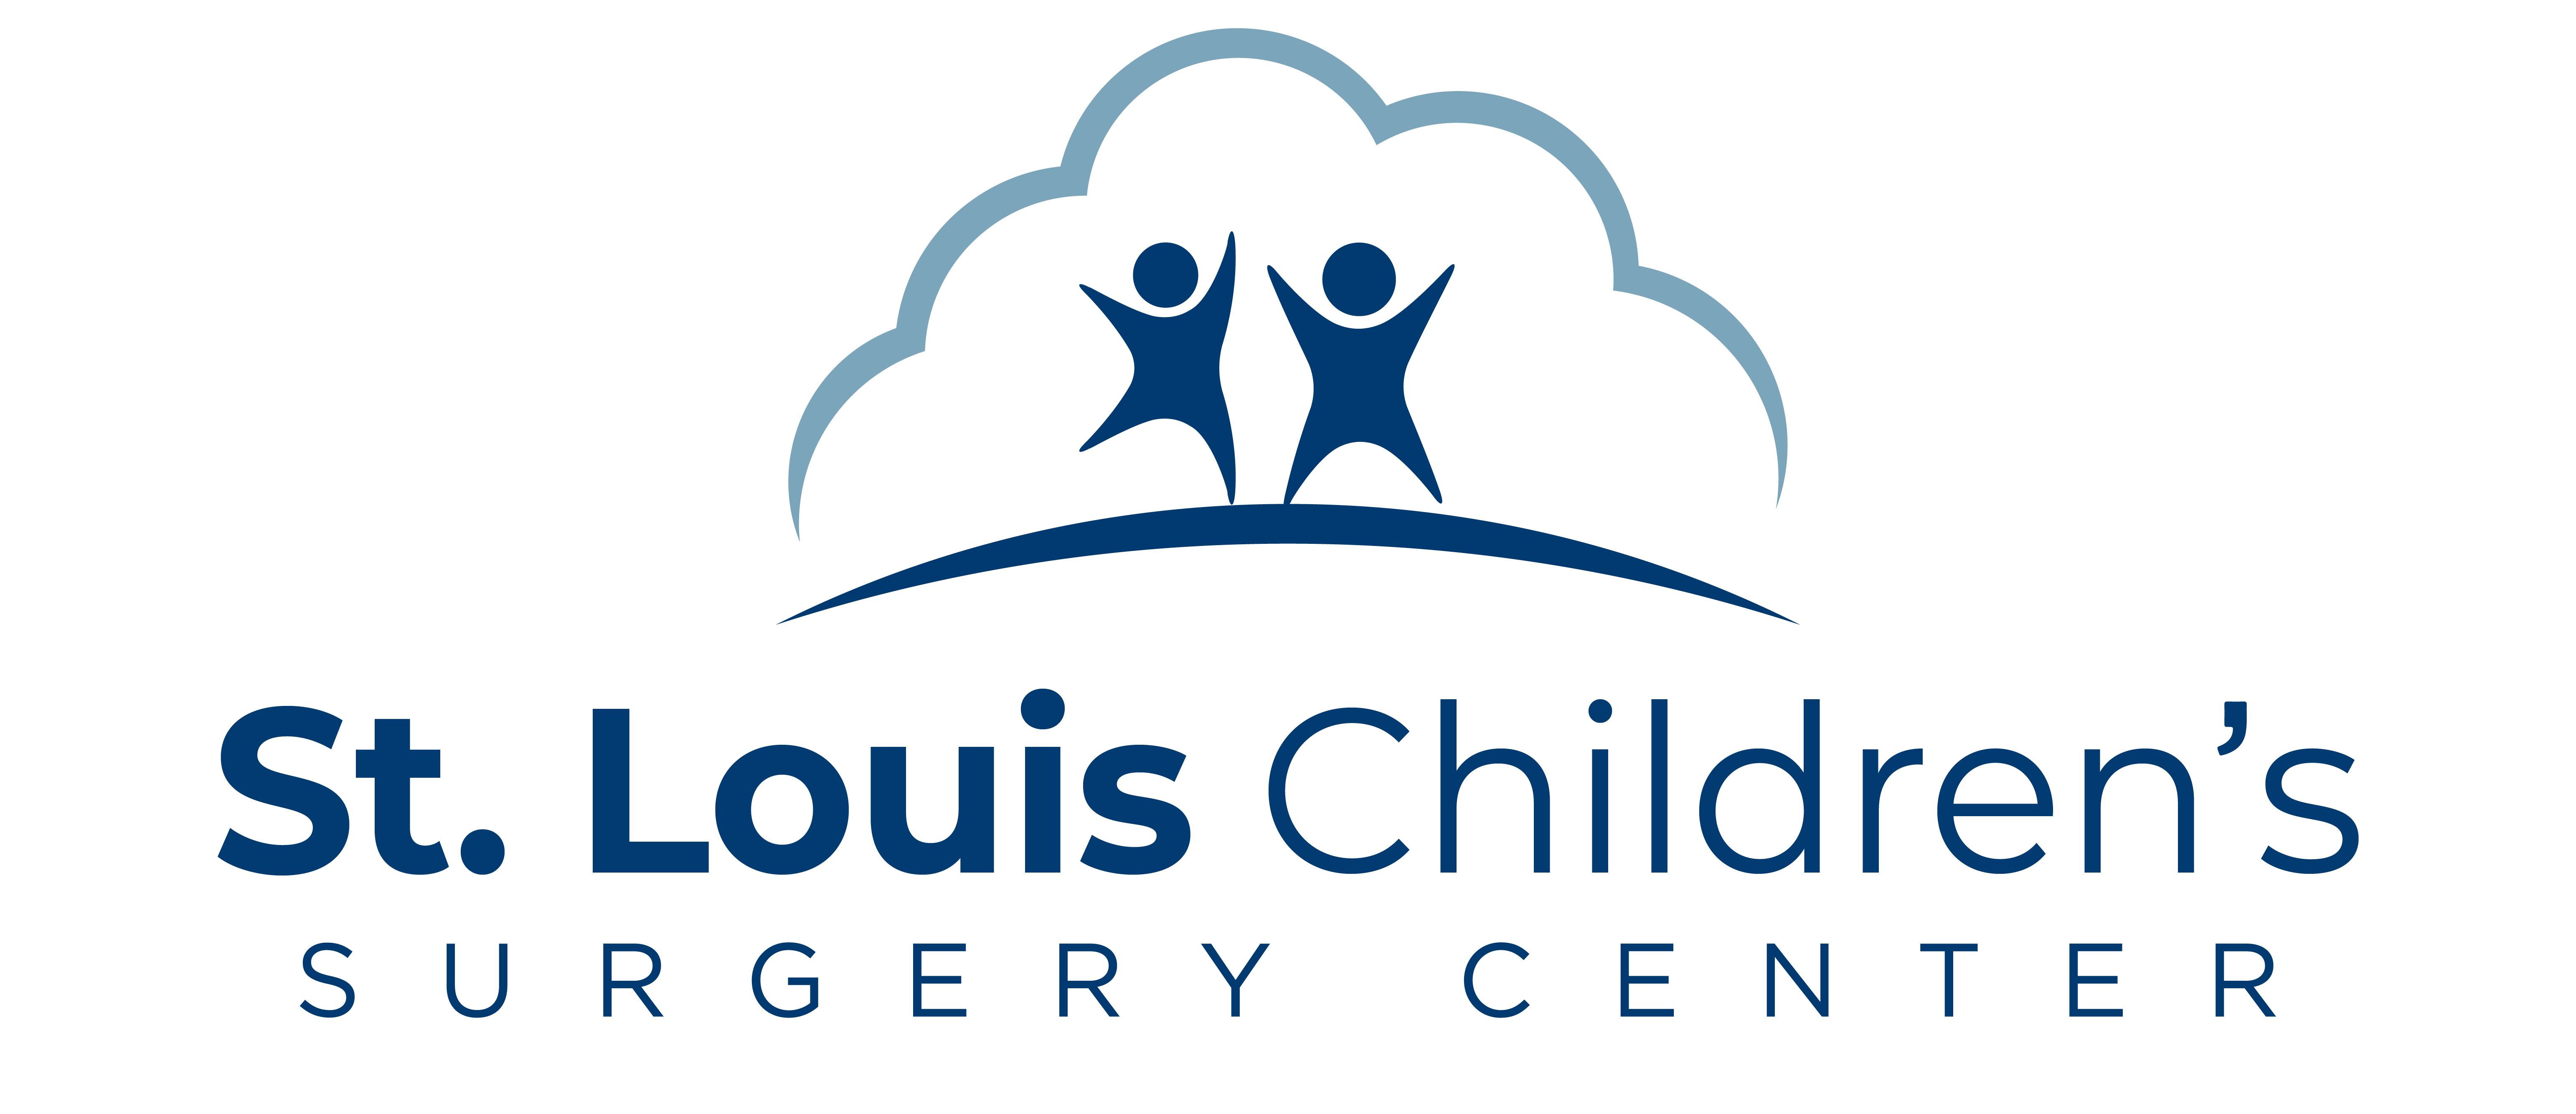 St. Louis Children's Surgery Center